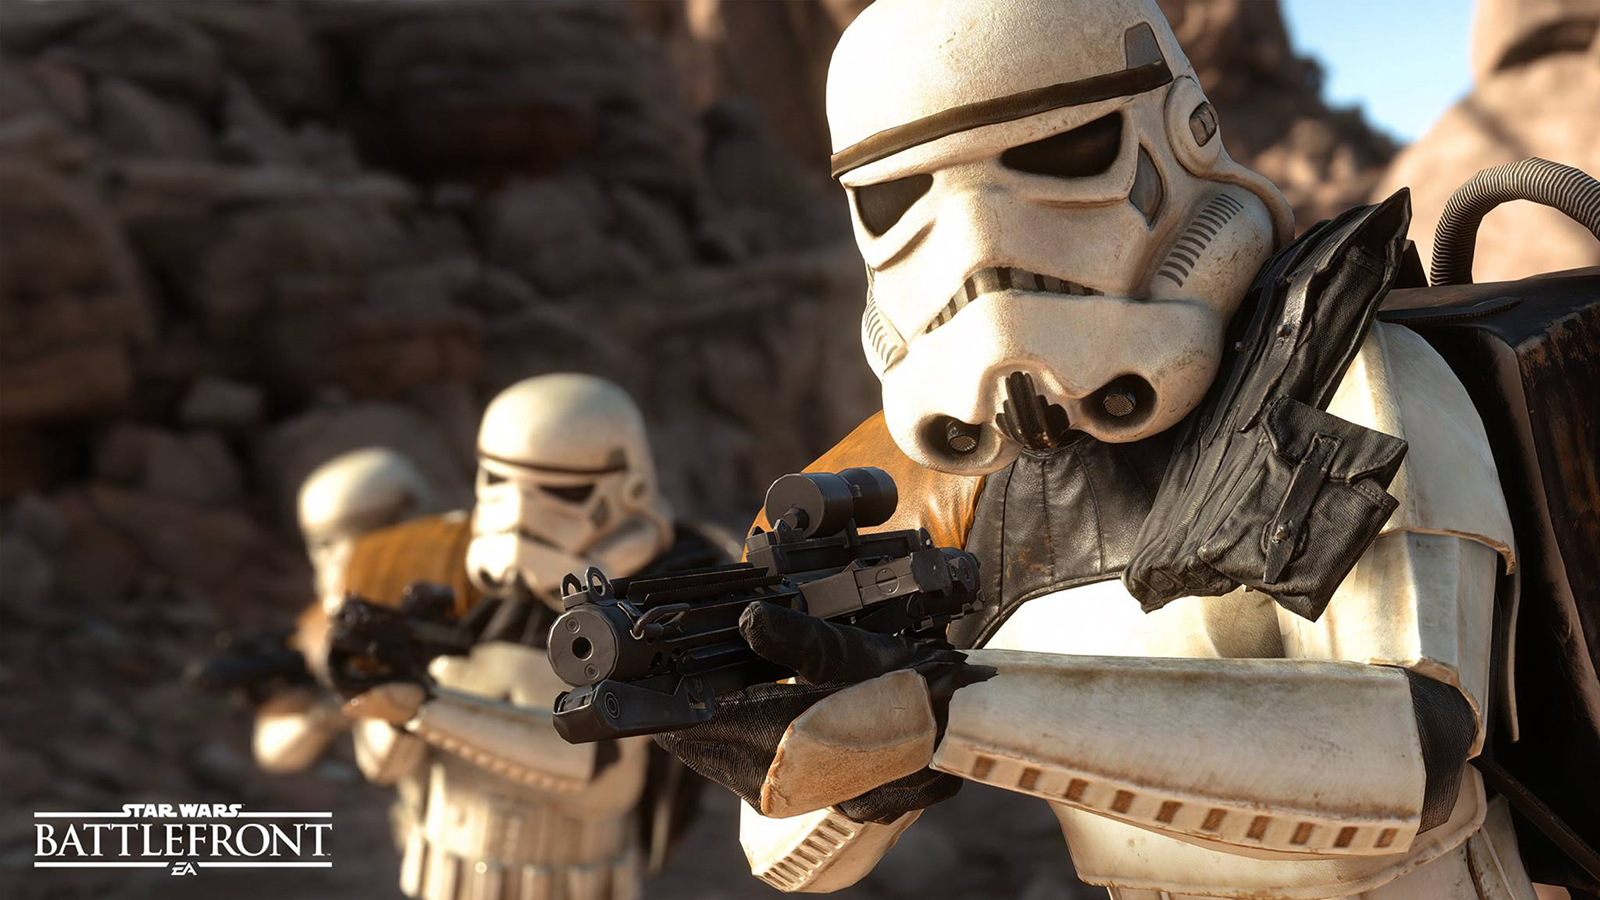 General 1600x900 Star Wars: Battlefront Imperial Stormtrooper bodysuit armor helmet gun Star Wars weapon video games Electronic Arts movie characters